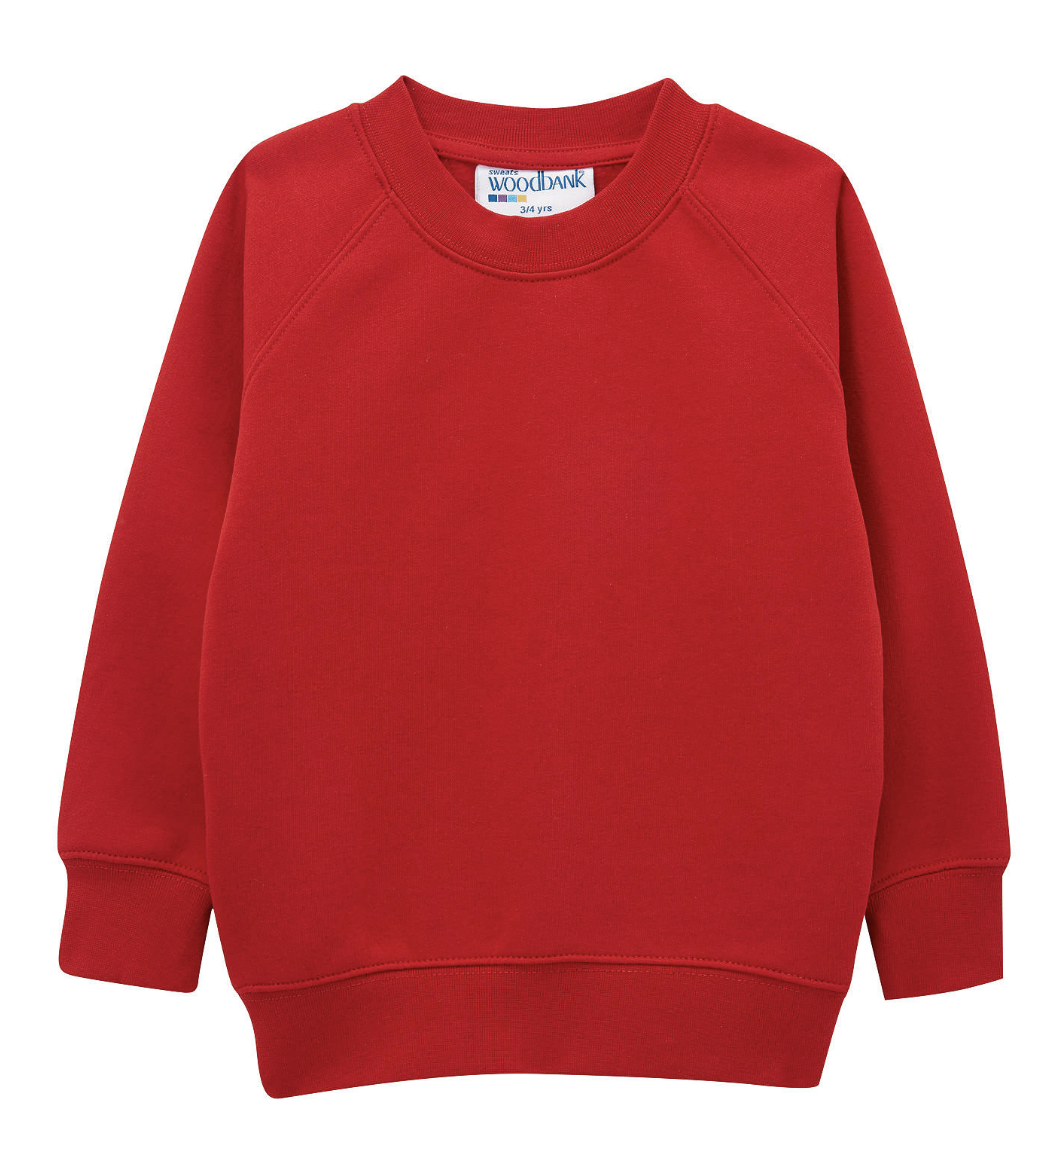 Manor Primary Red Sweatshirt with School Logo